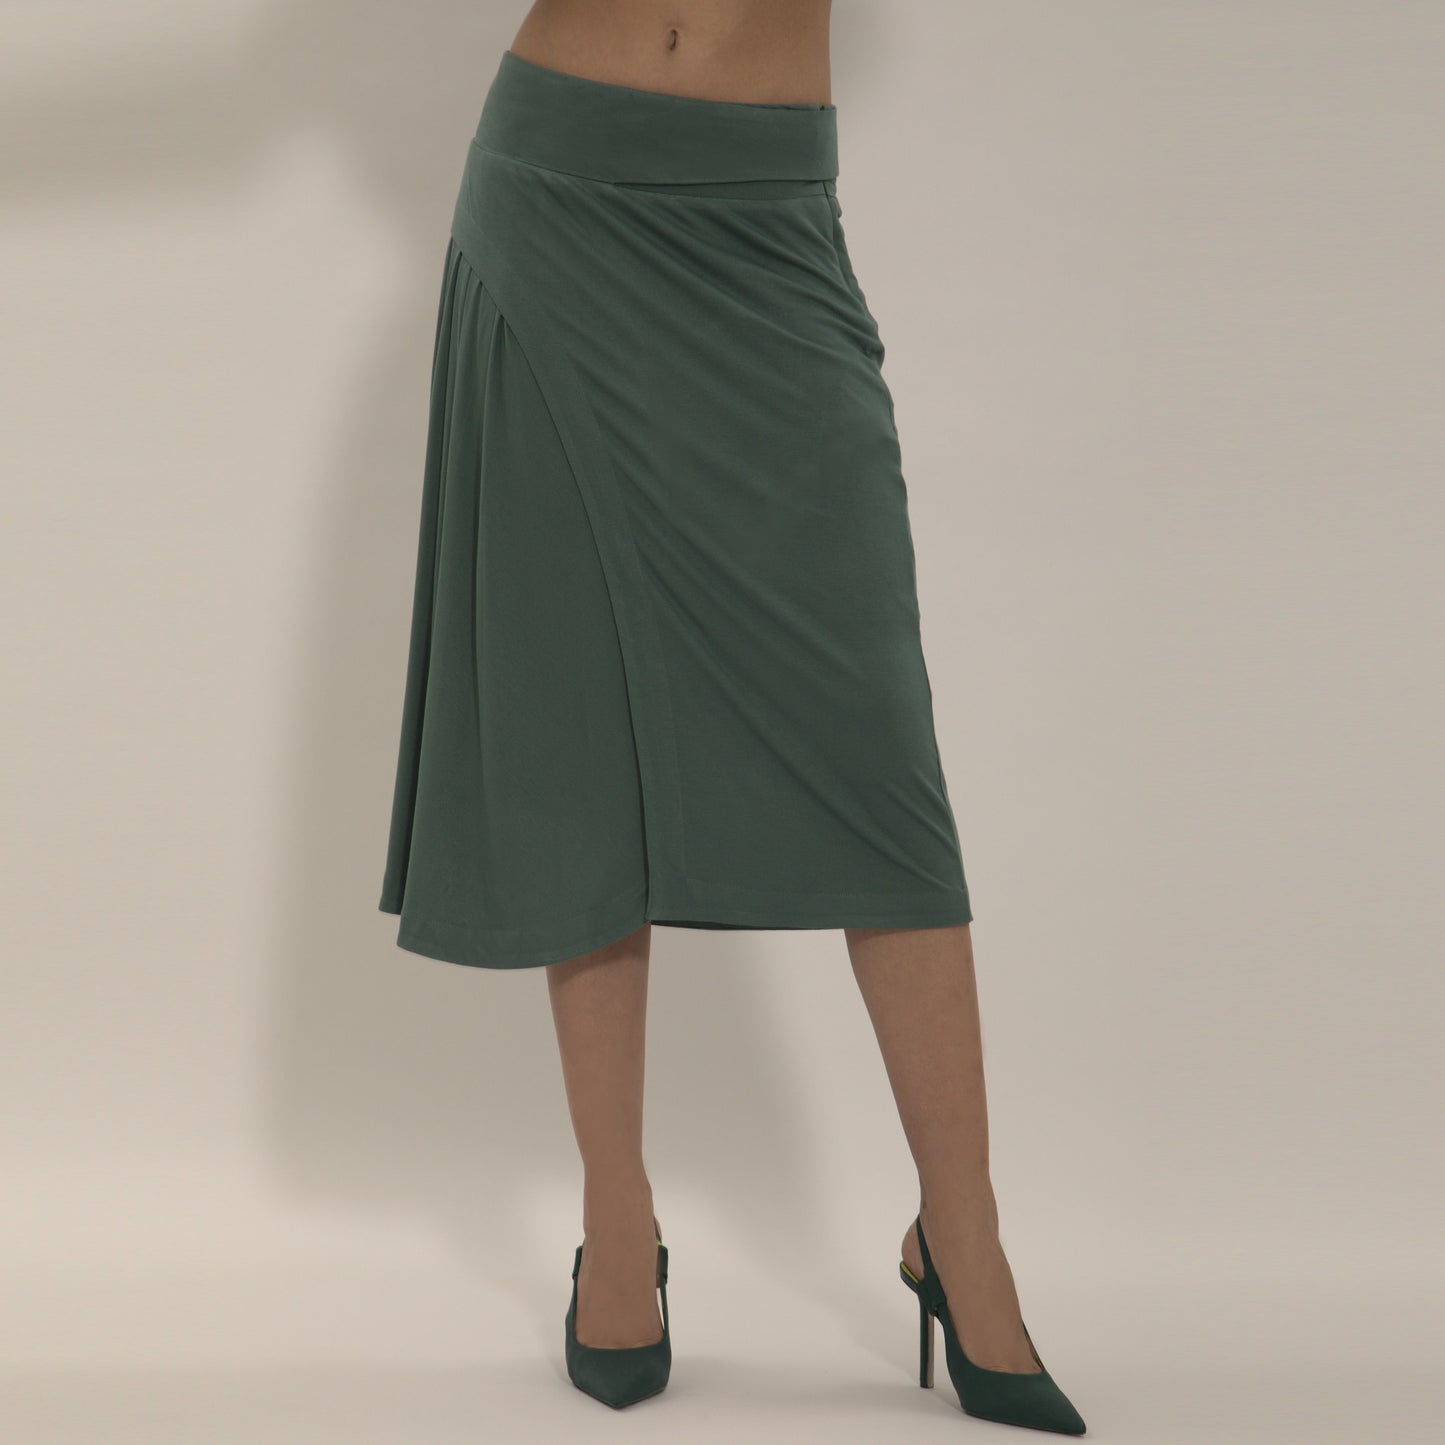 Yasmin - Asymmetrical midi skirt